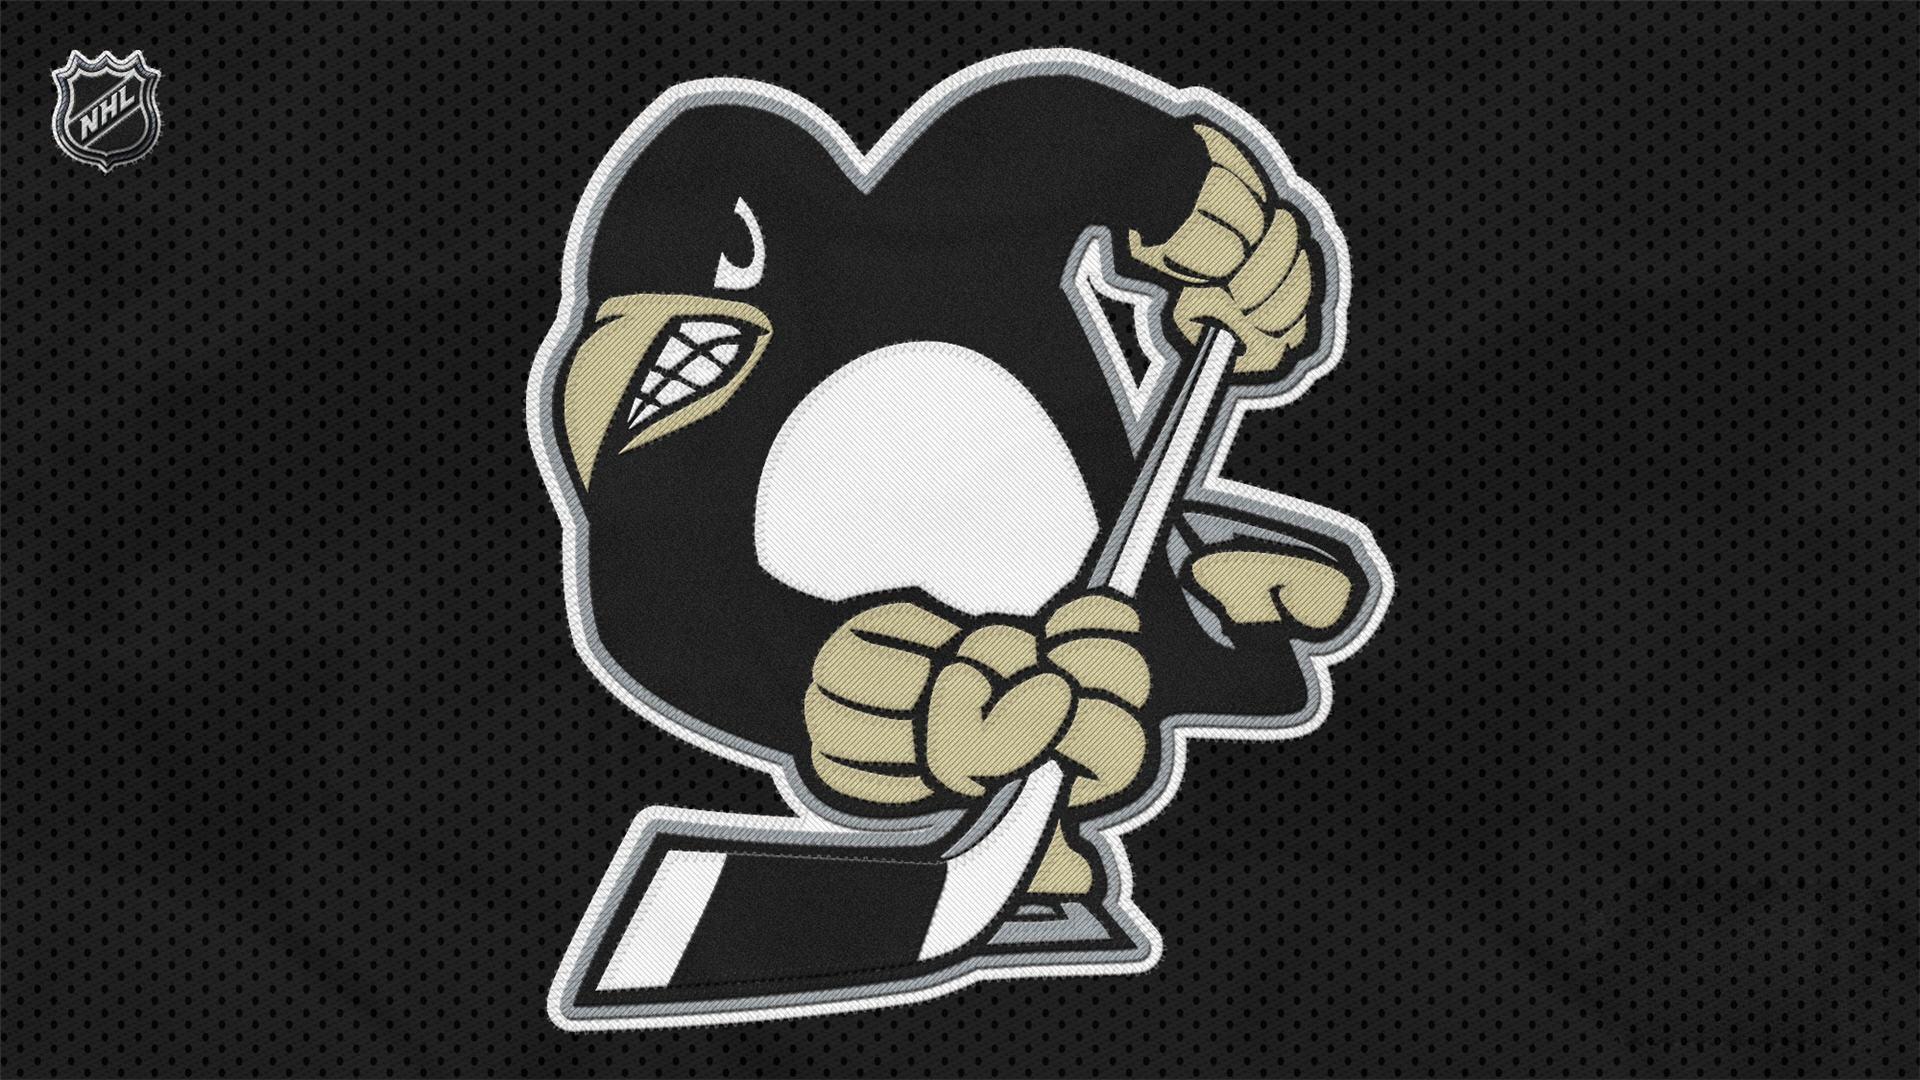 Wallpaper.wiki Pittsburgh Penguins Wallpaper Pittsburgh Penguins